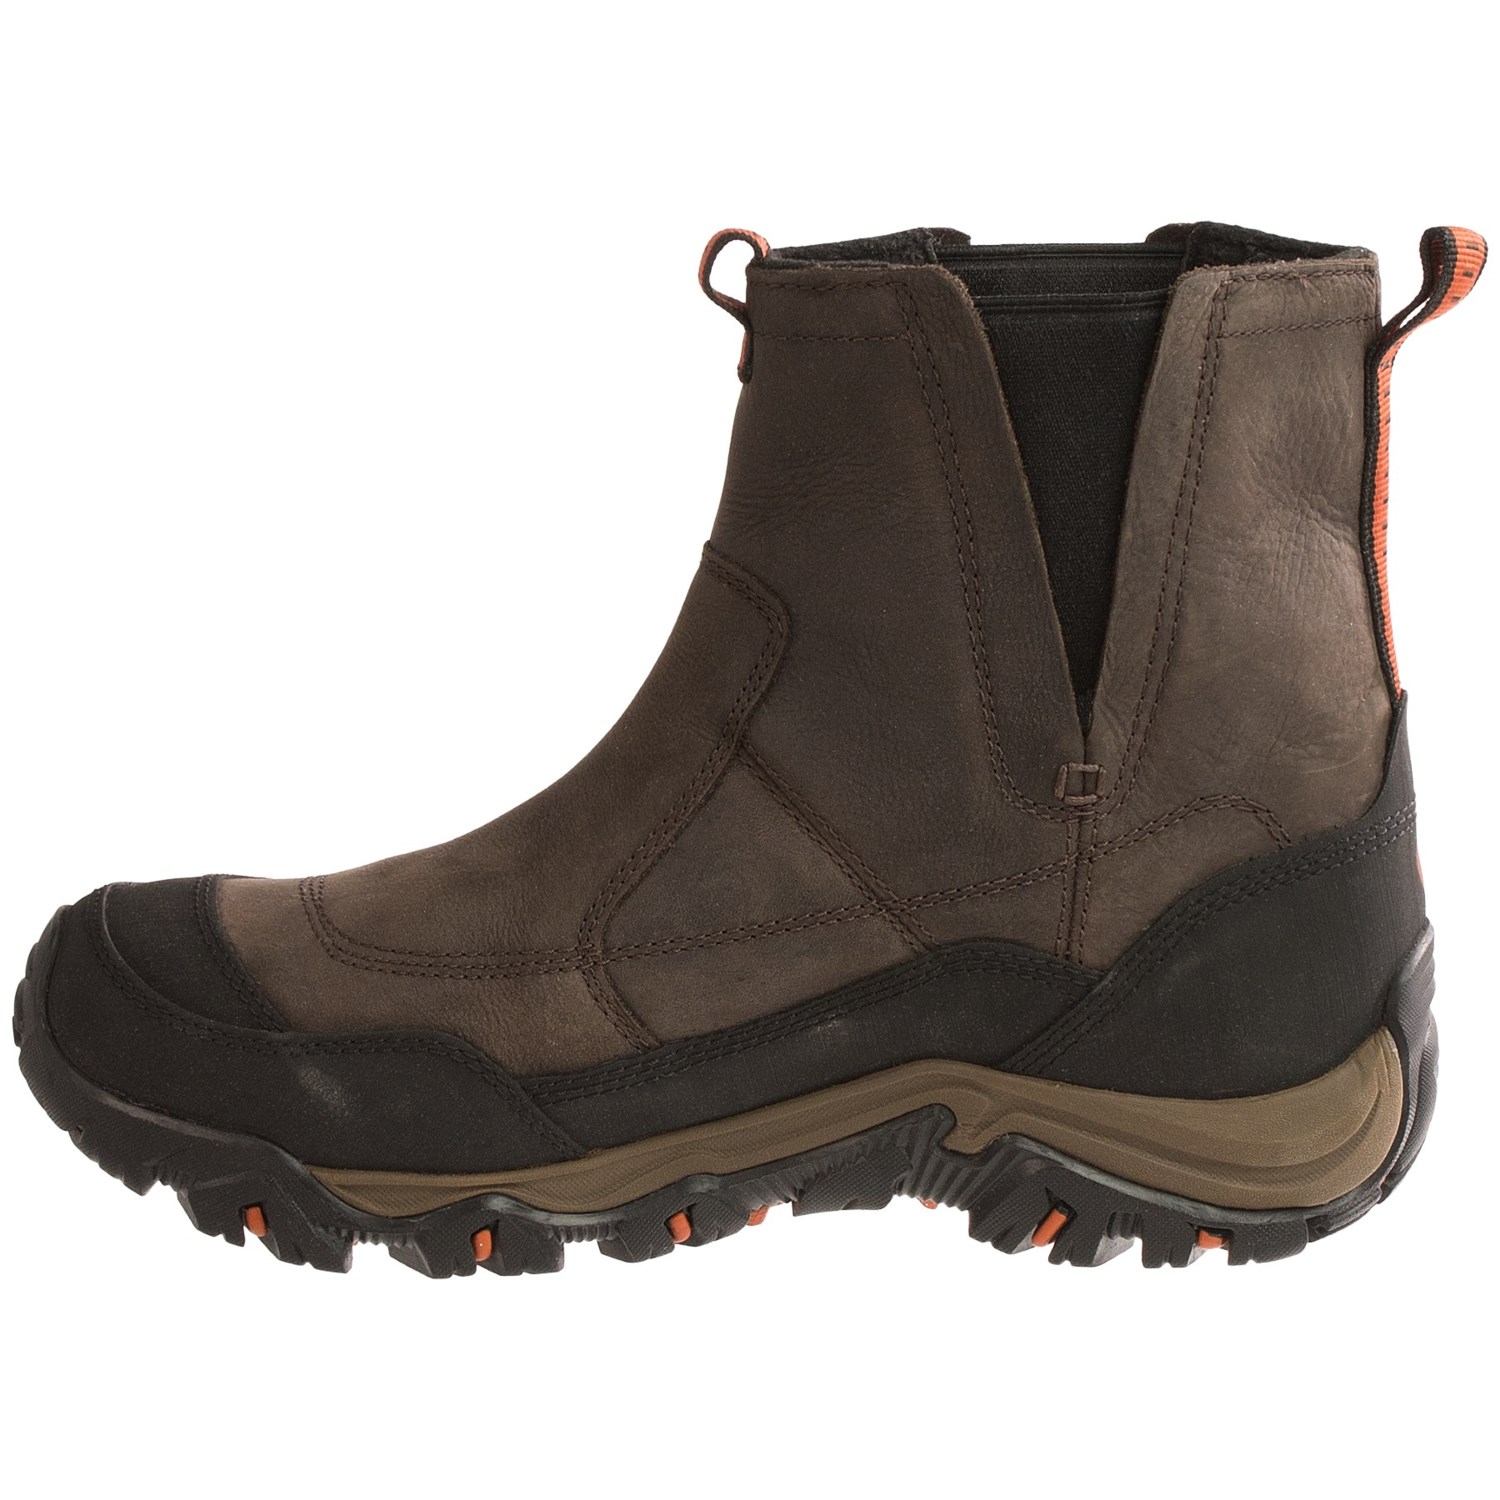 Merrell Polarand Rove Pull Snow Boots (For Men) 9224F - Save 25%